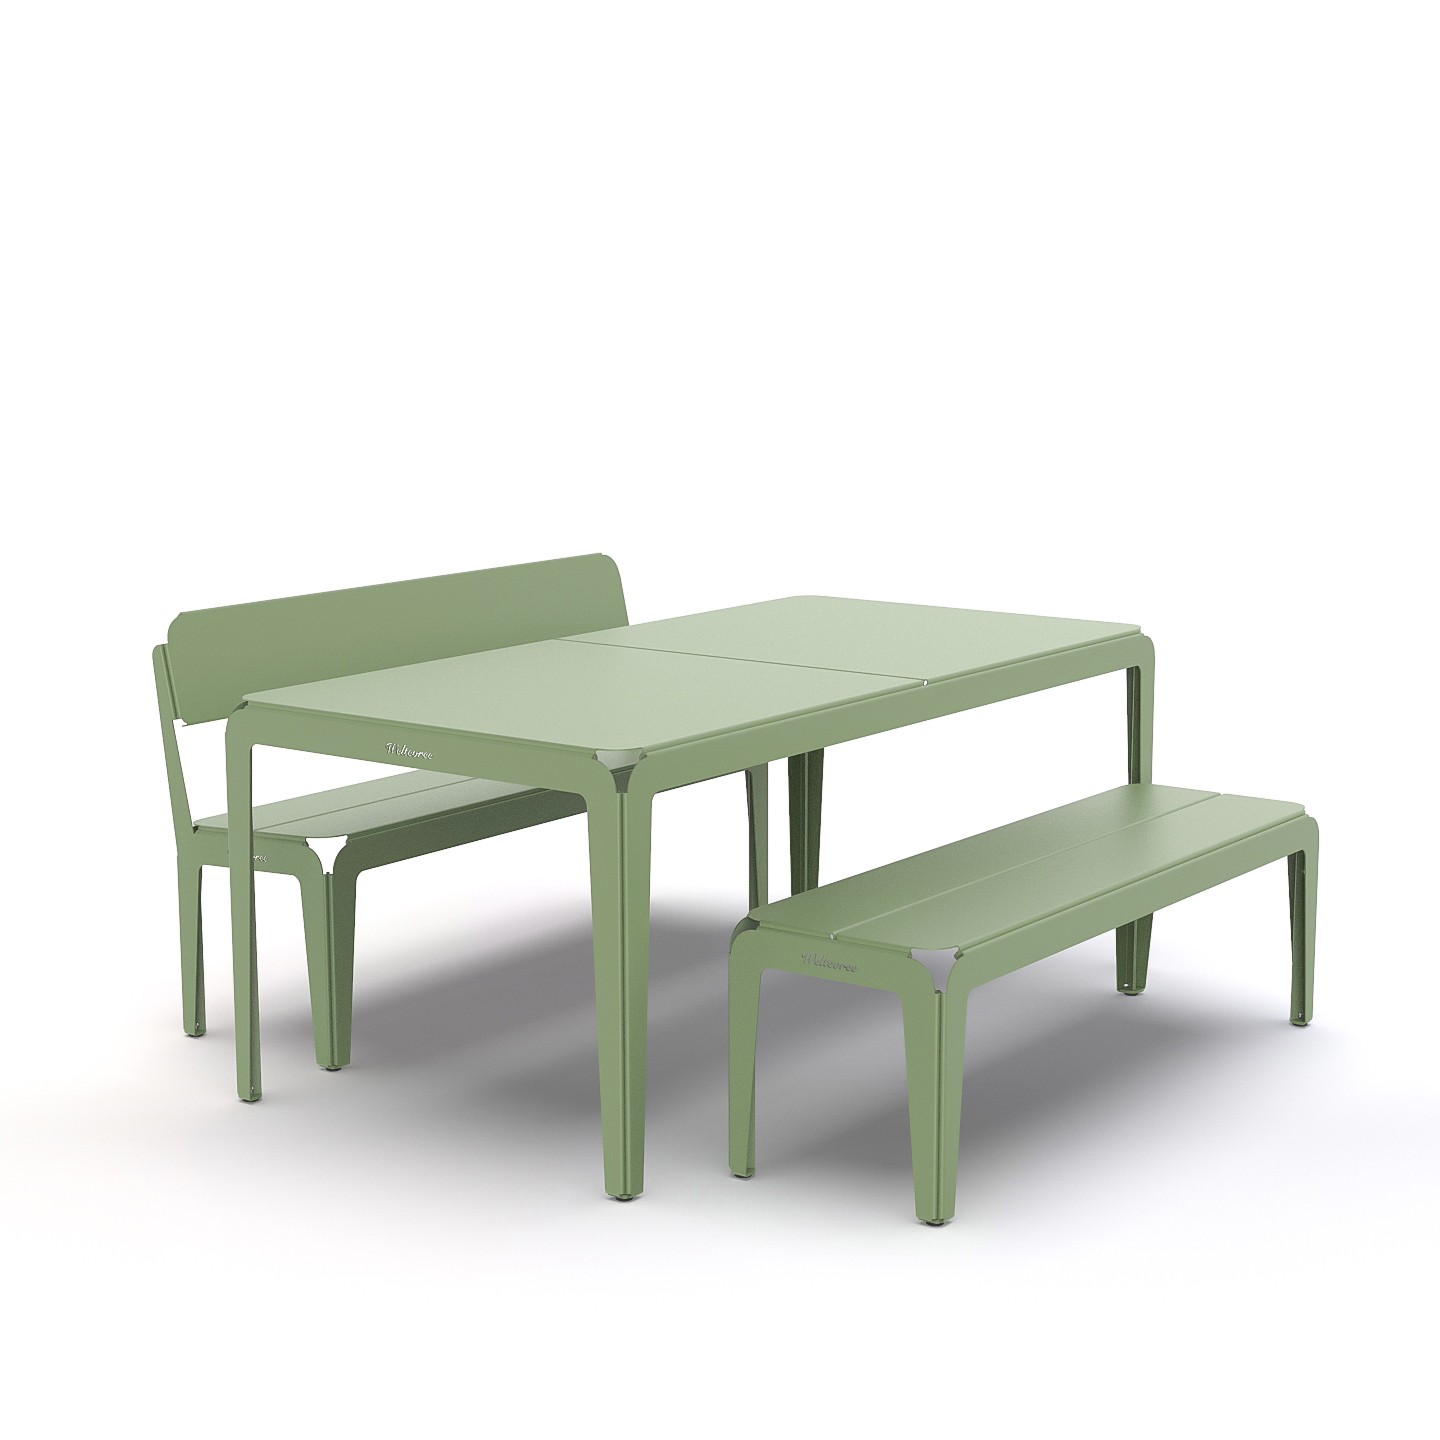 Weltevree-green-bended-table-bench